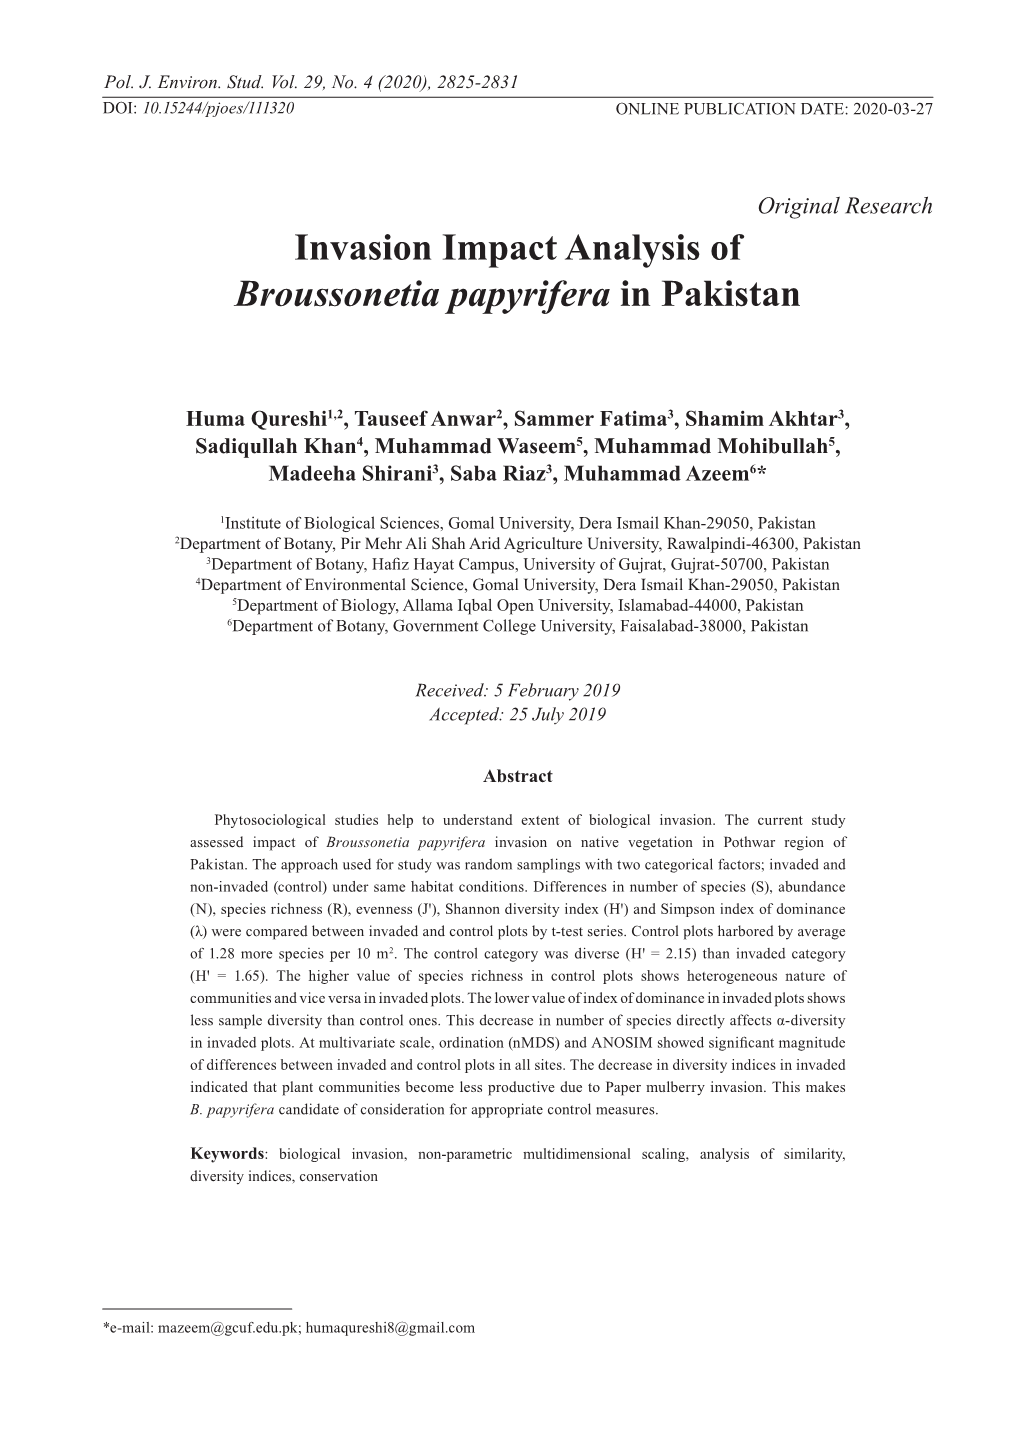 Invasion Impact Analysis of Broussonetia Papyrifera in Pakistan